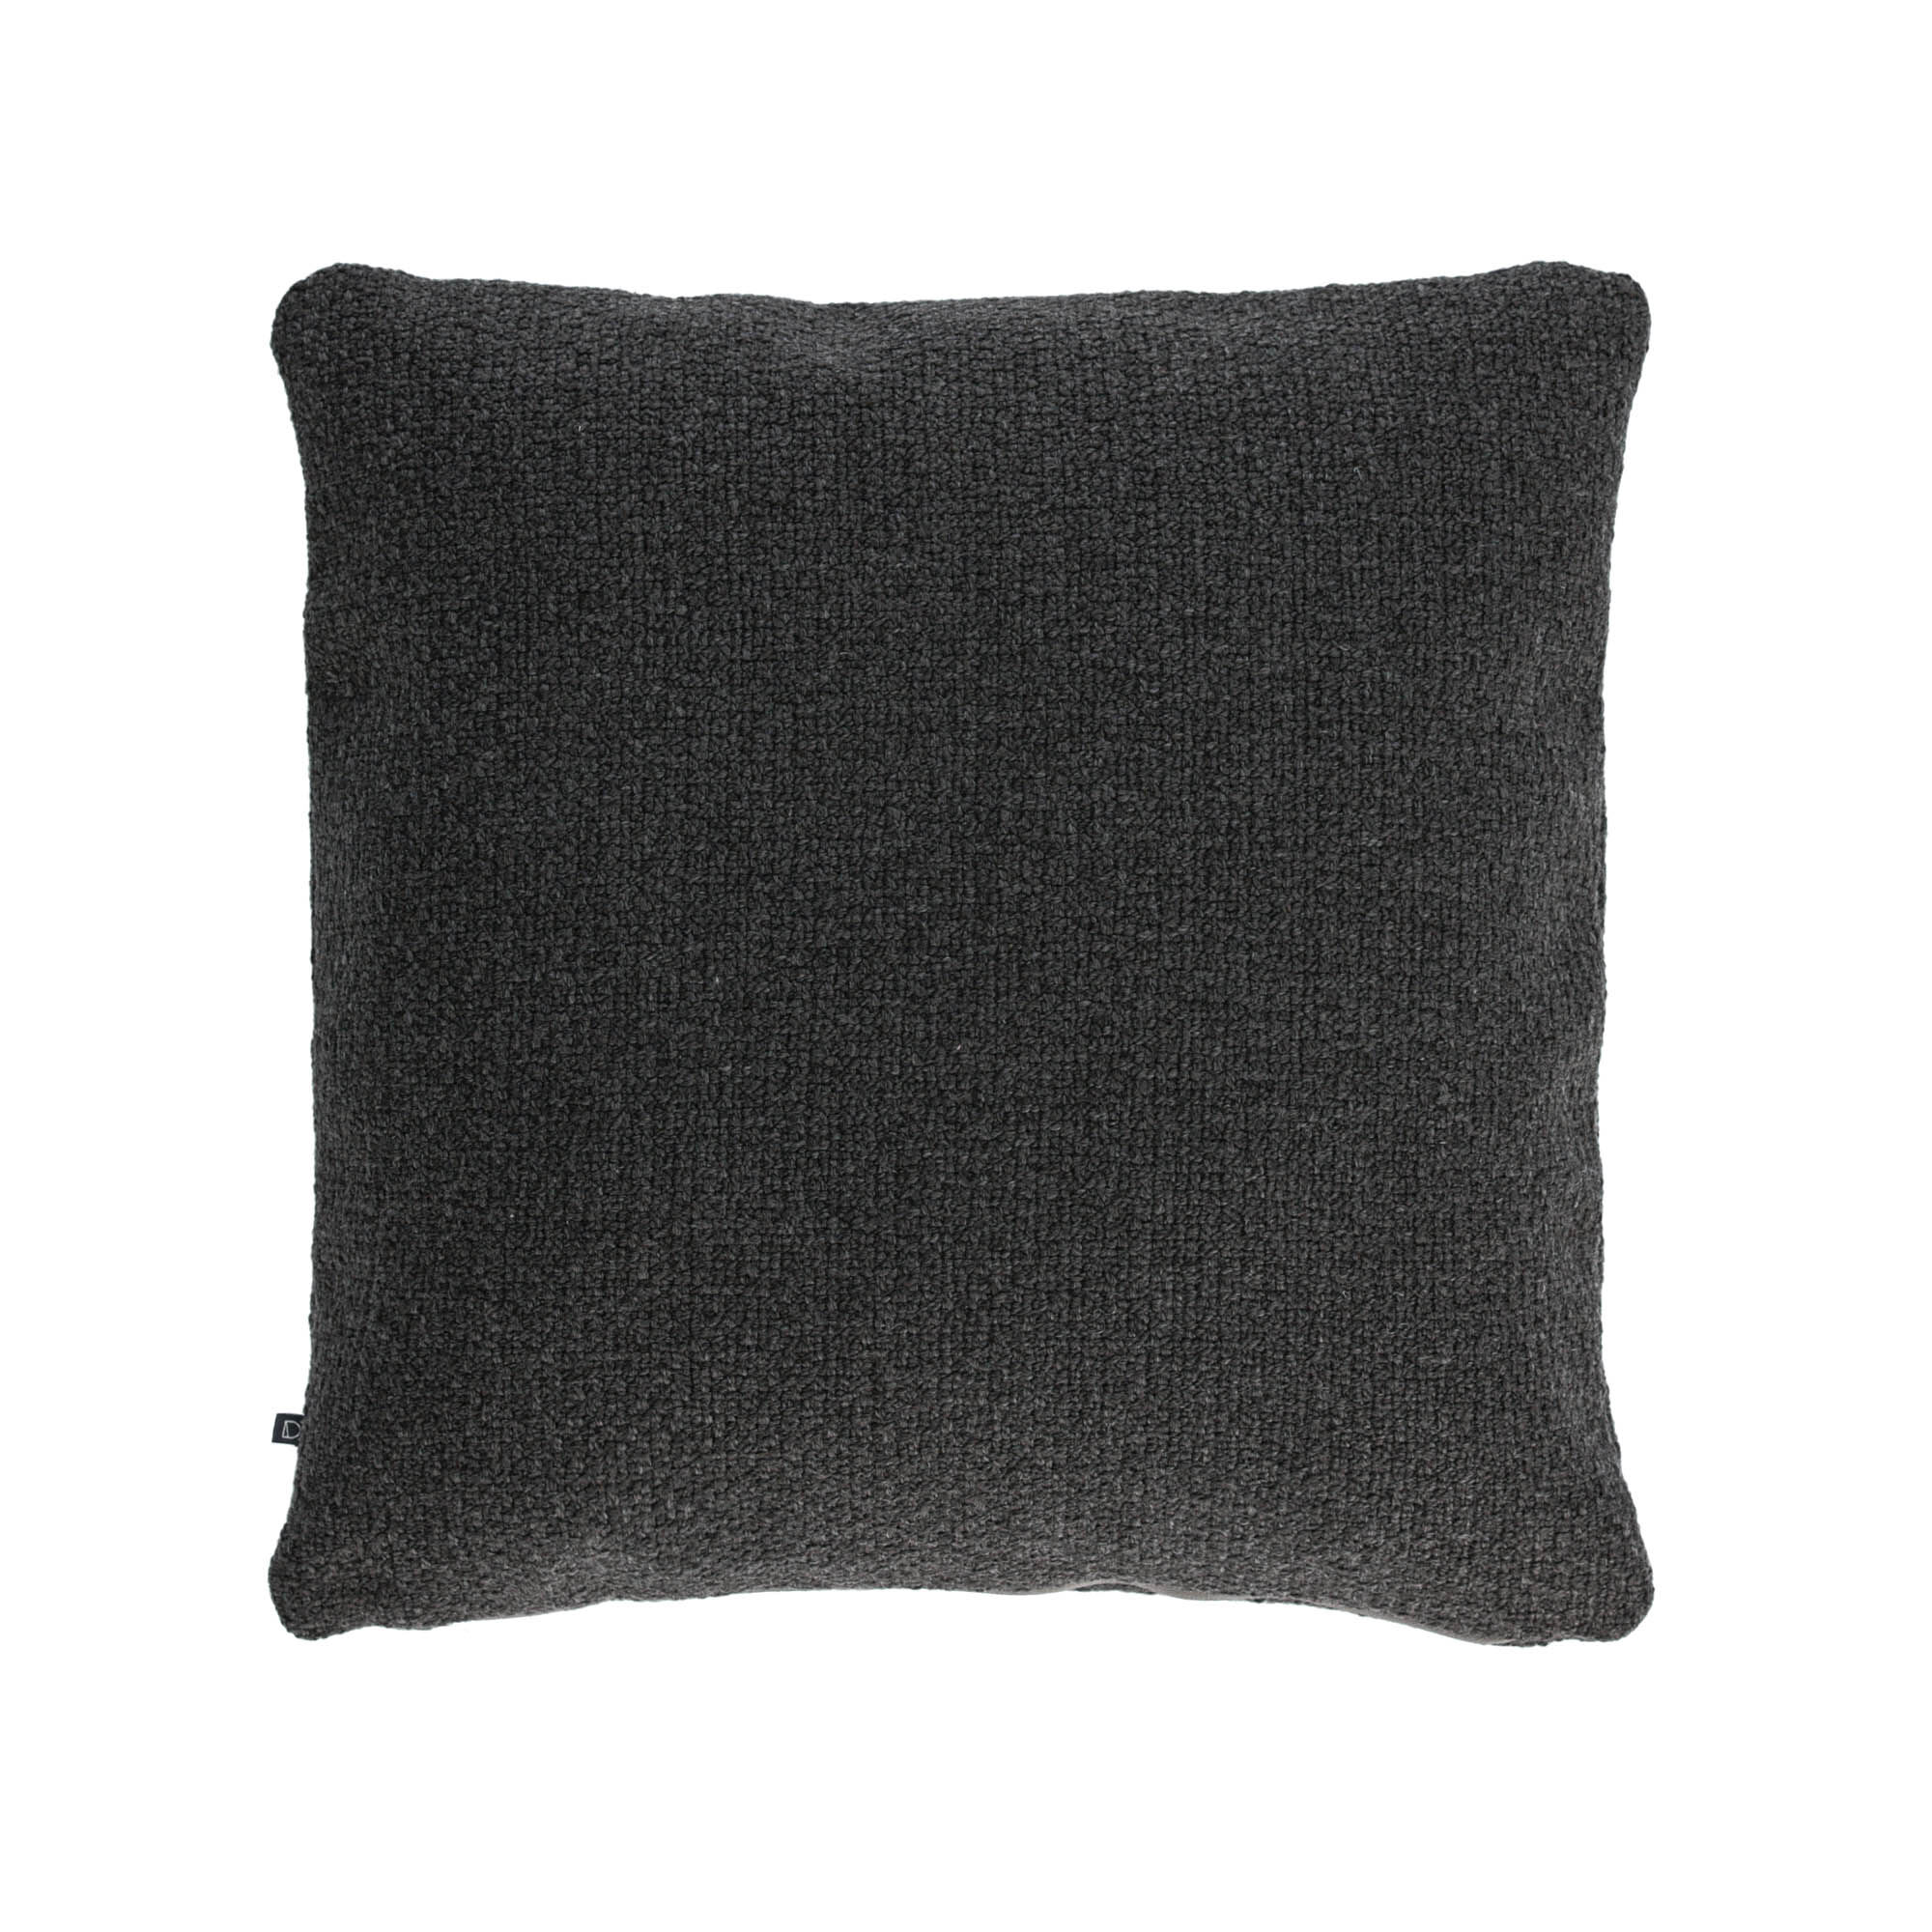 Kave Home Noa grey cushion cover 45 x 45 cm